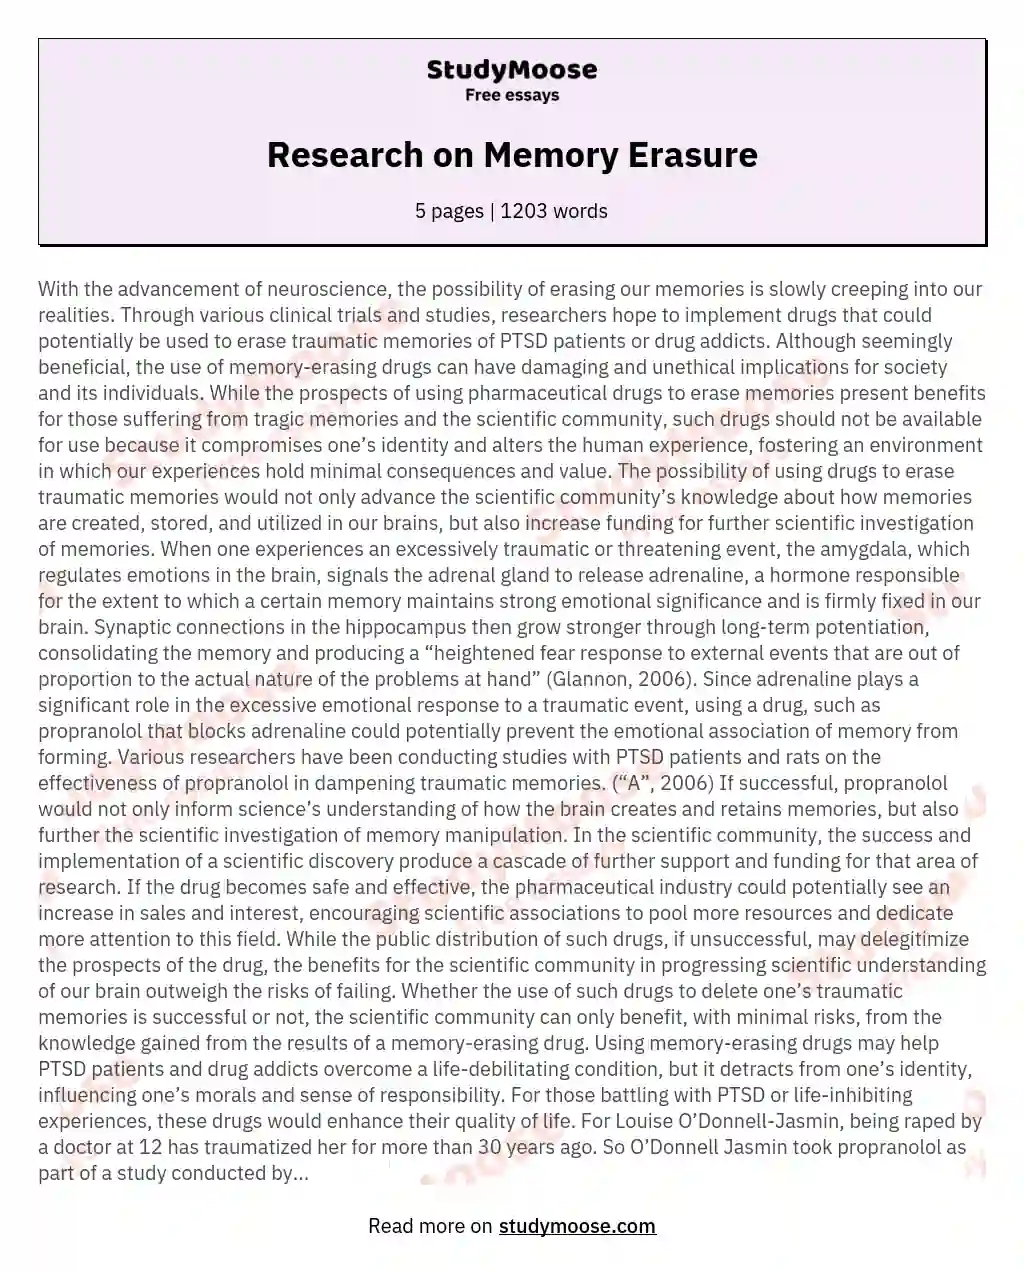 Research on Memory Erasure essay